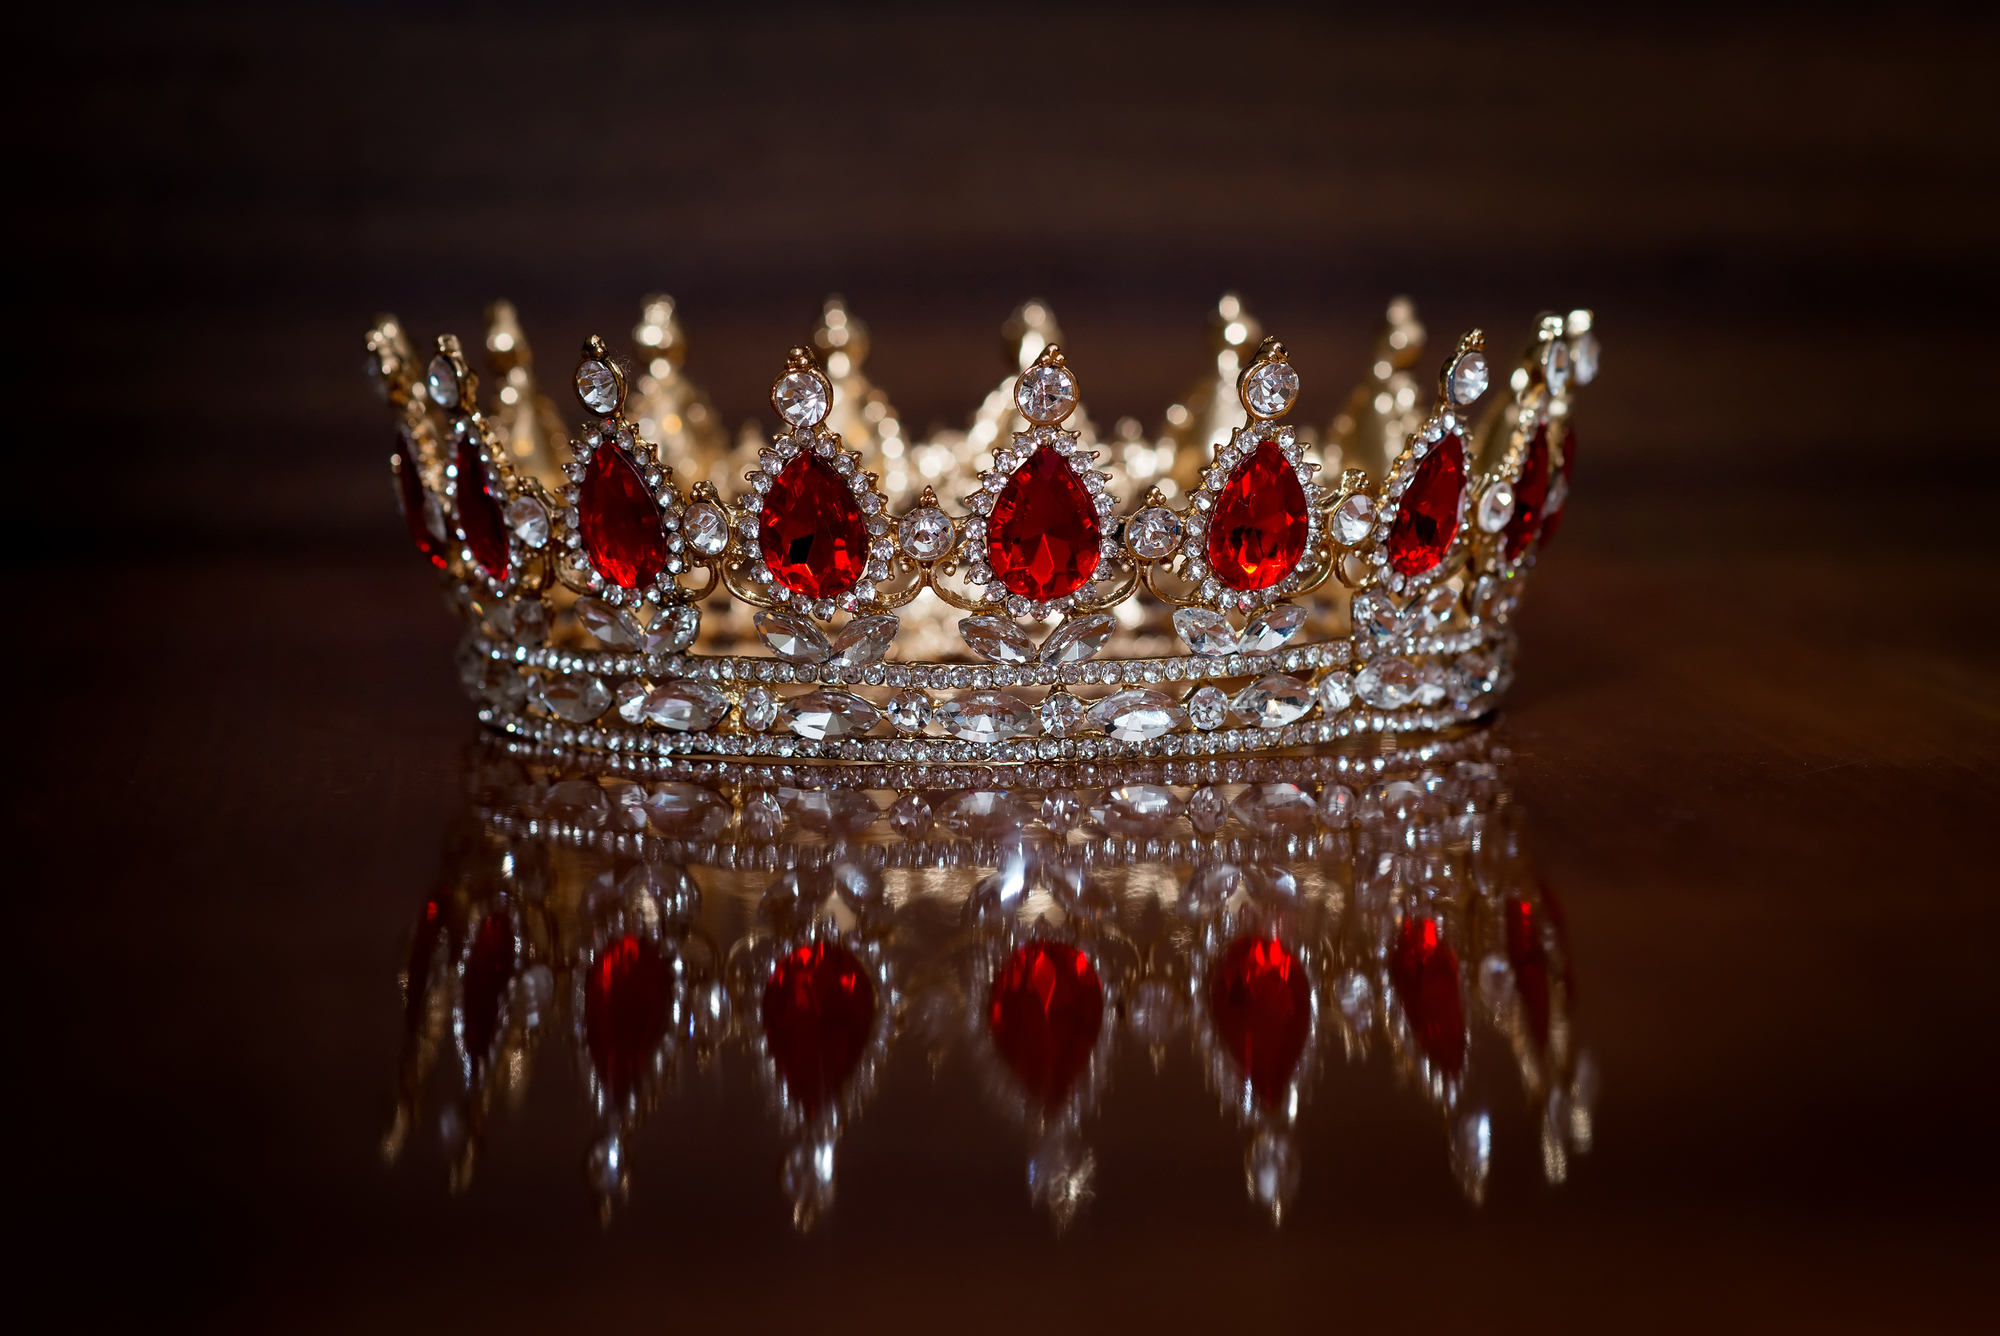 Luxurious crown with precious stones